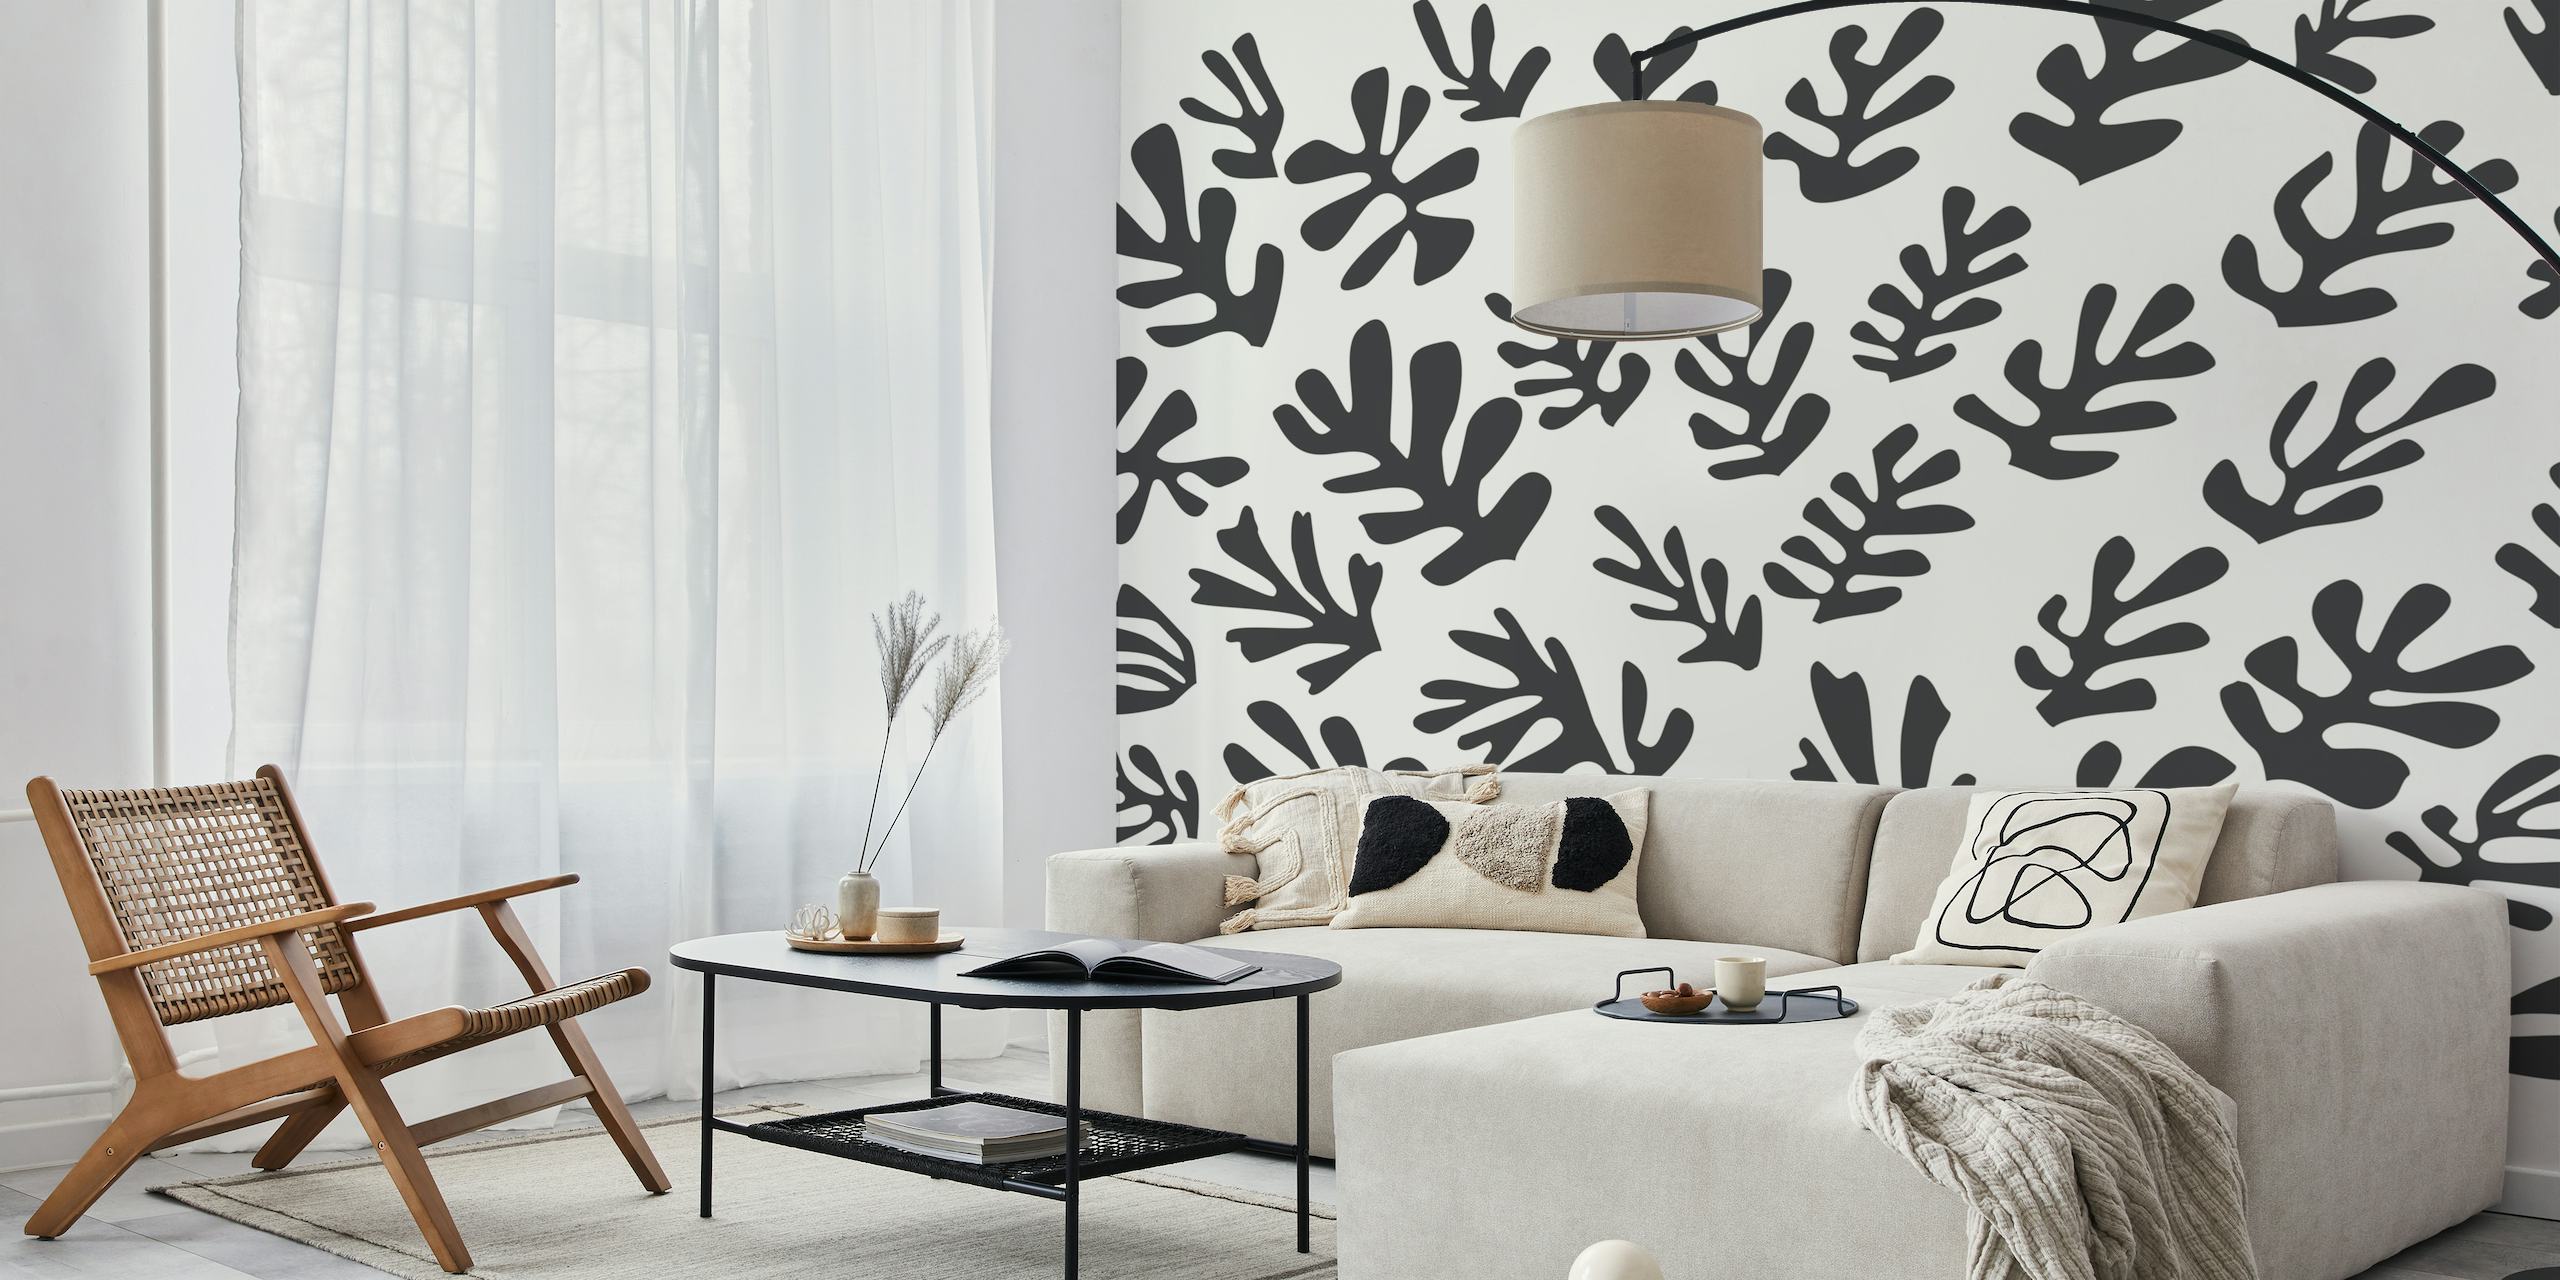 Matisse Inspired wallpaper